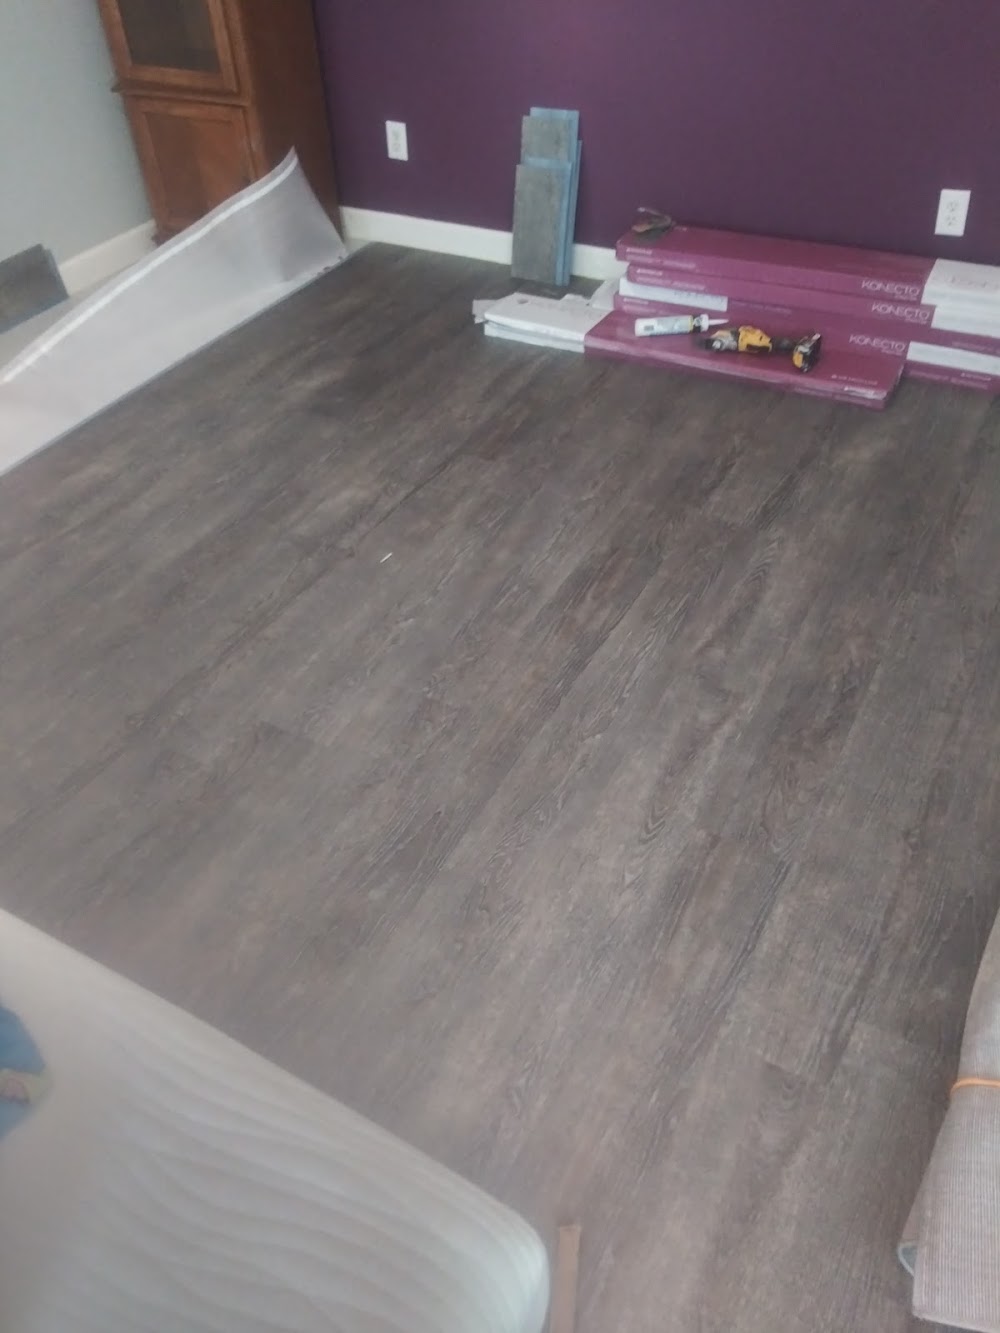 Bartling flooring and home improvement LLC